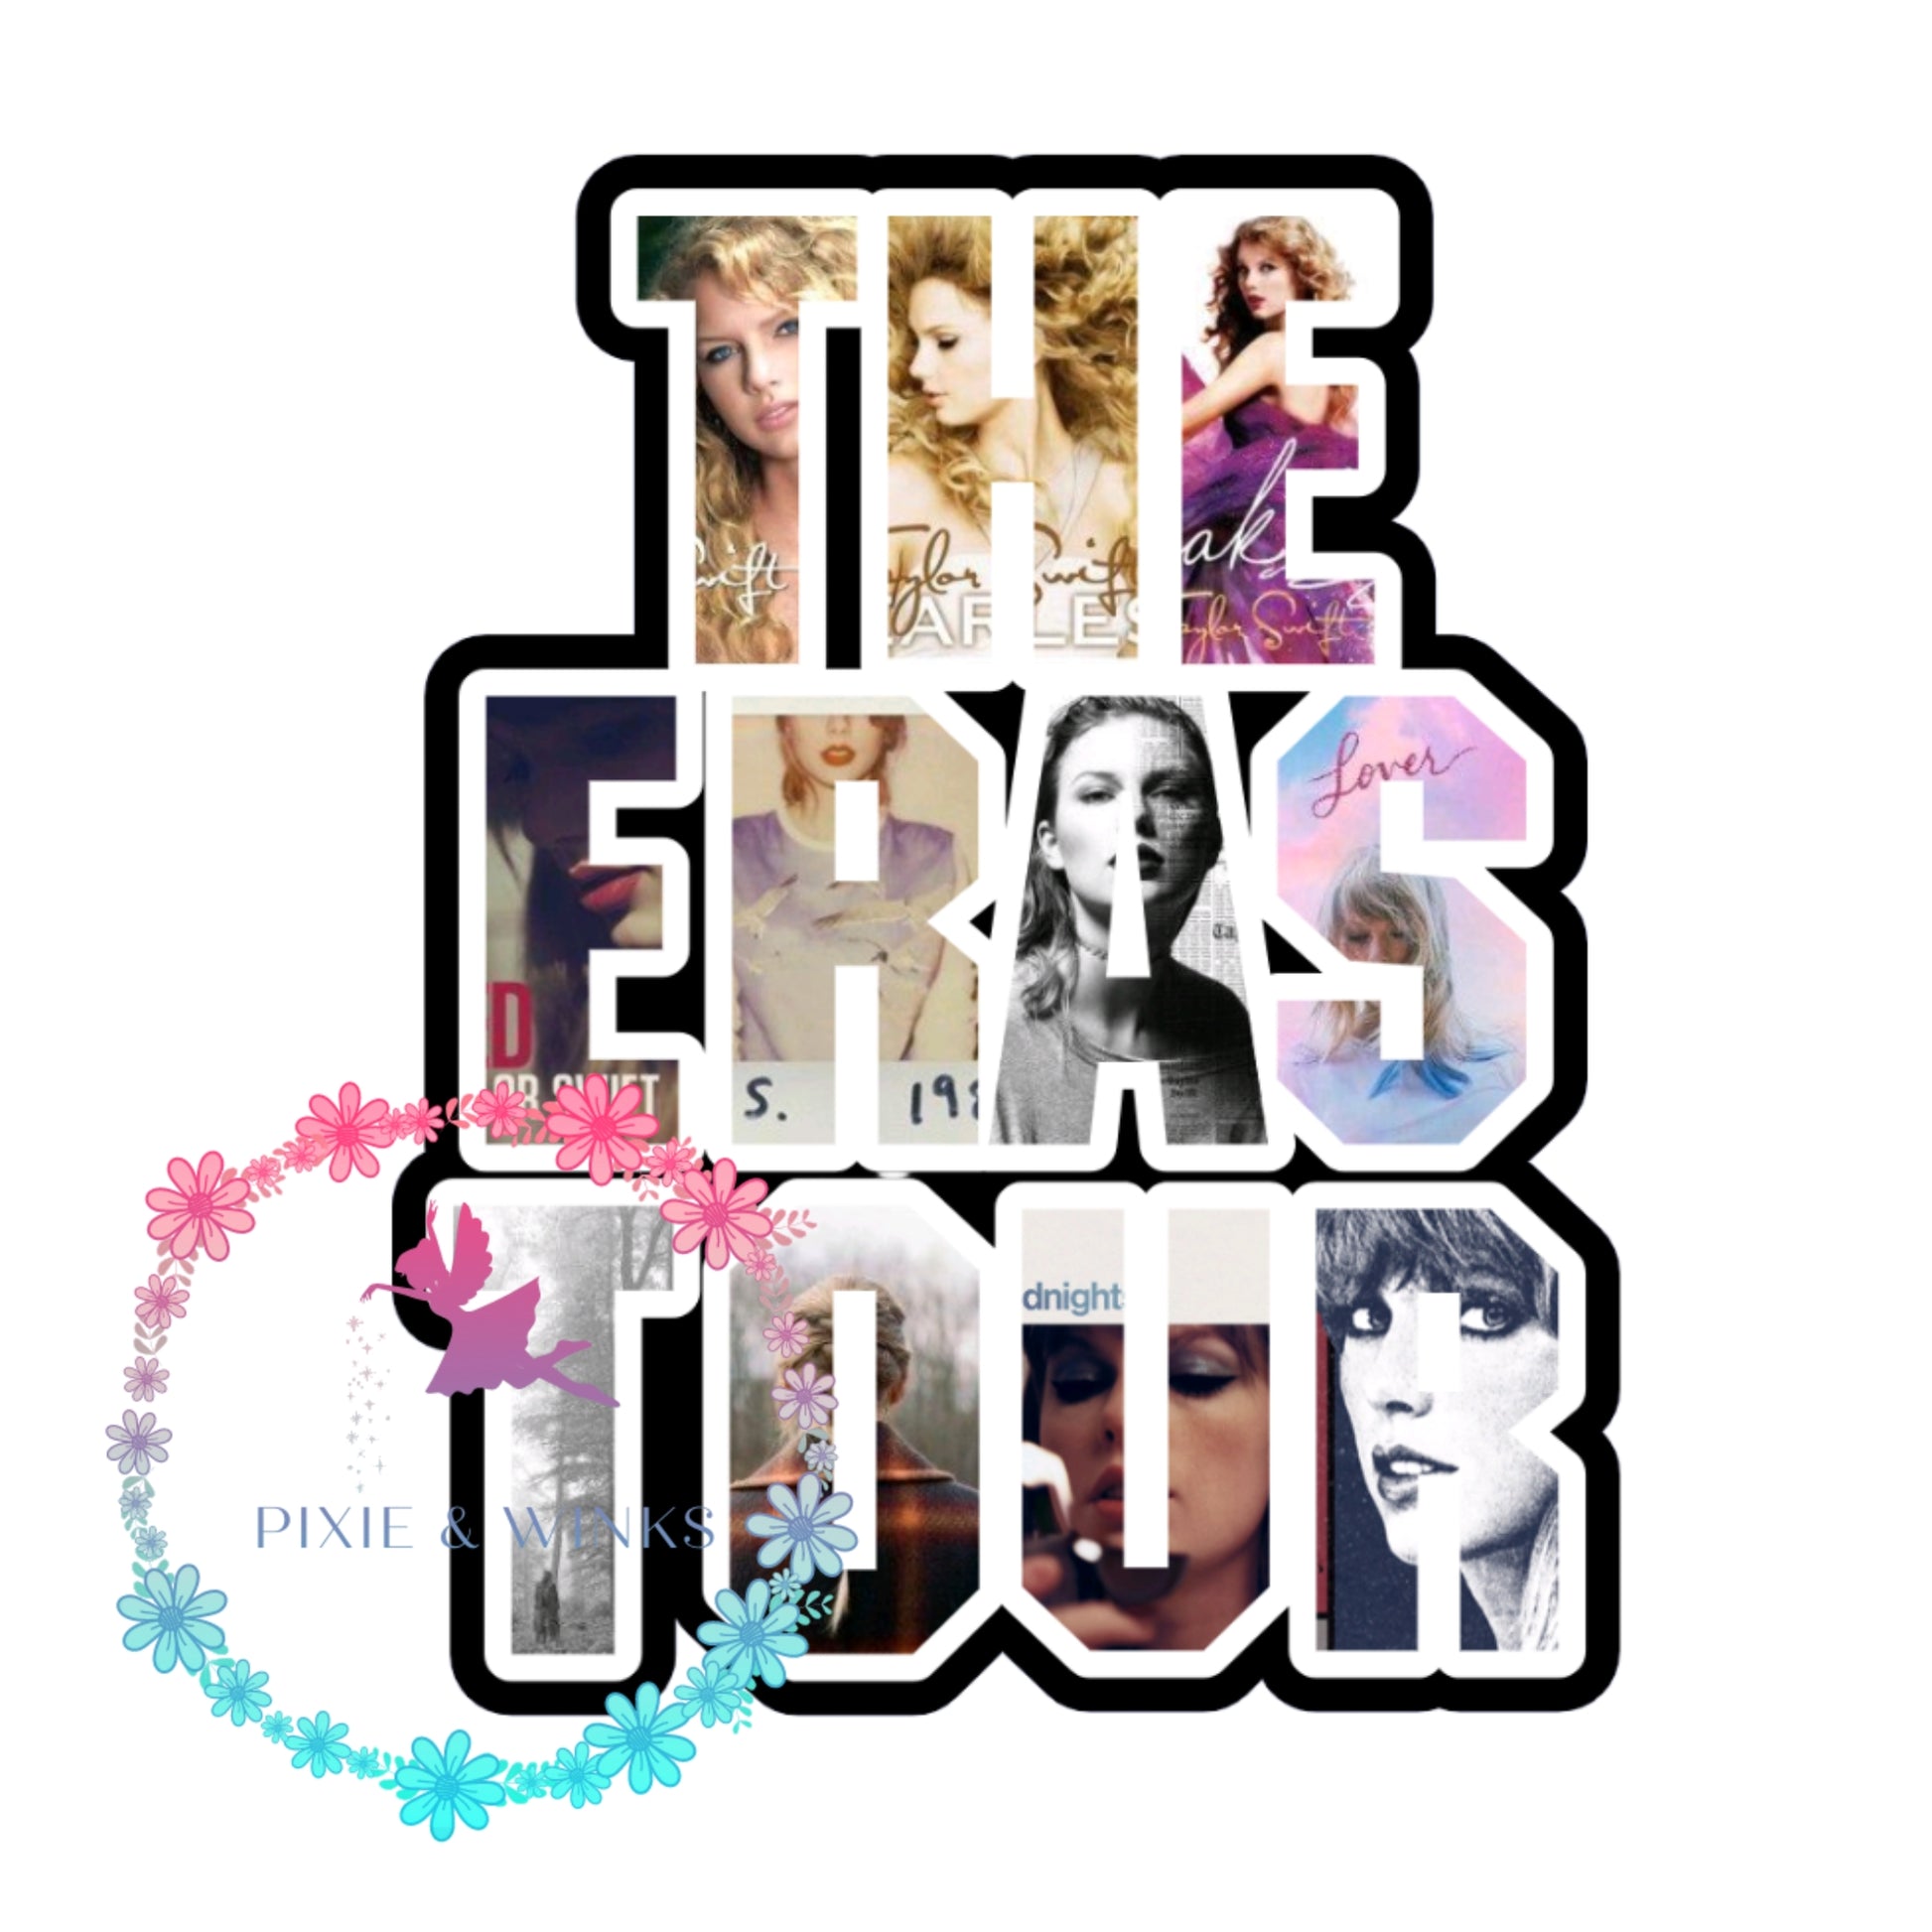 Taylor Swift The Eras Tour 2023 Poster, The Eras Tour Poster, Taylor  Vintage2023